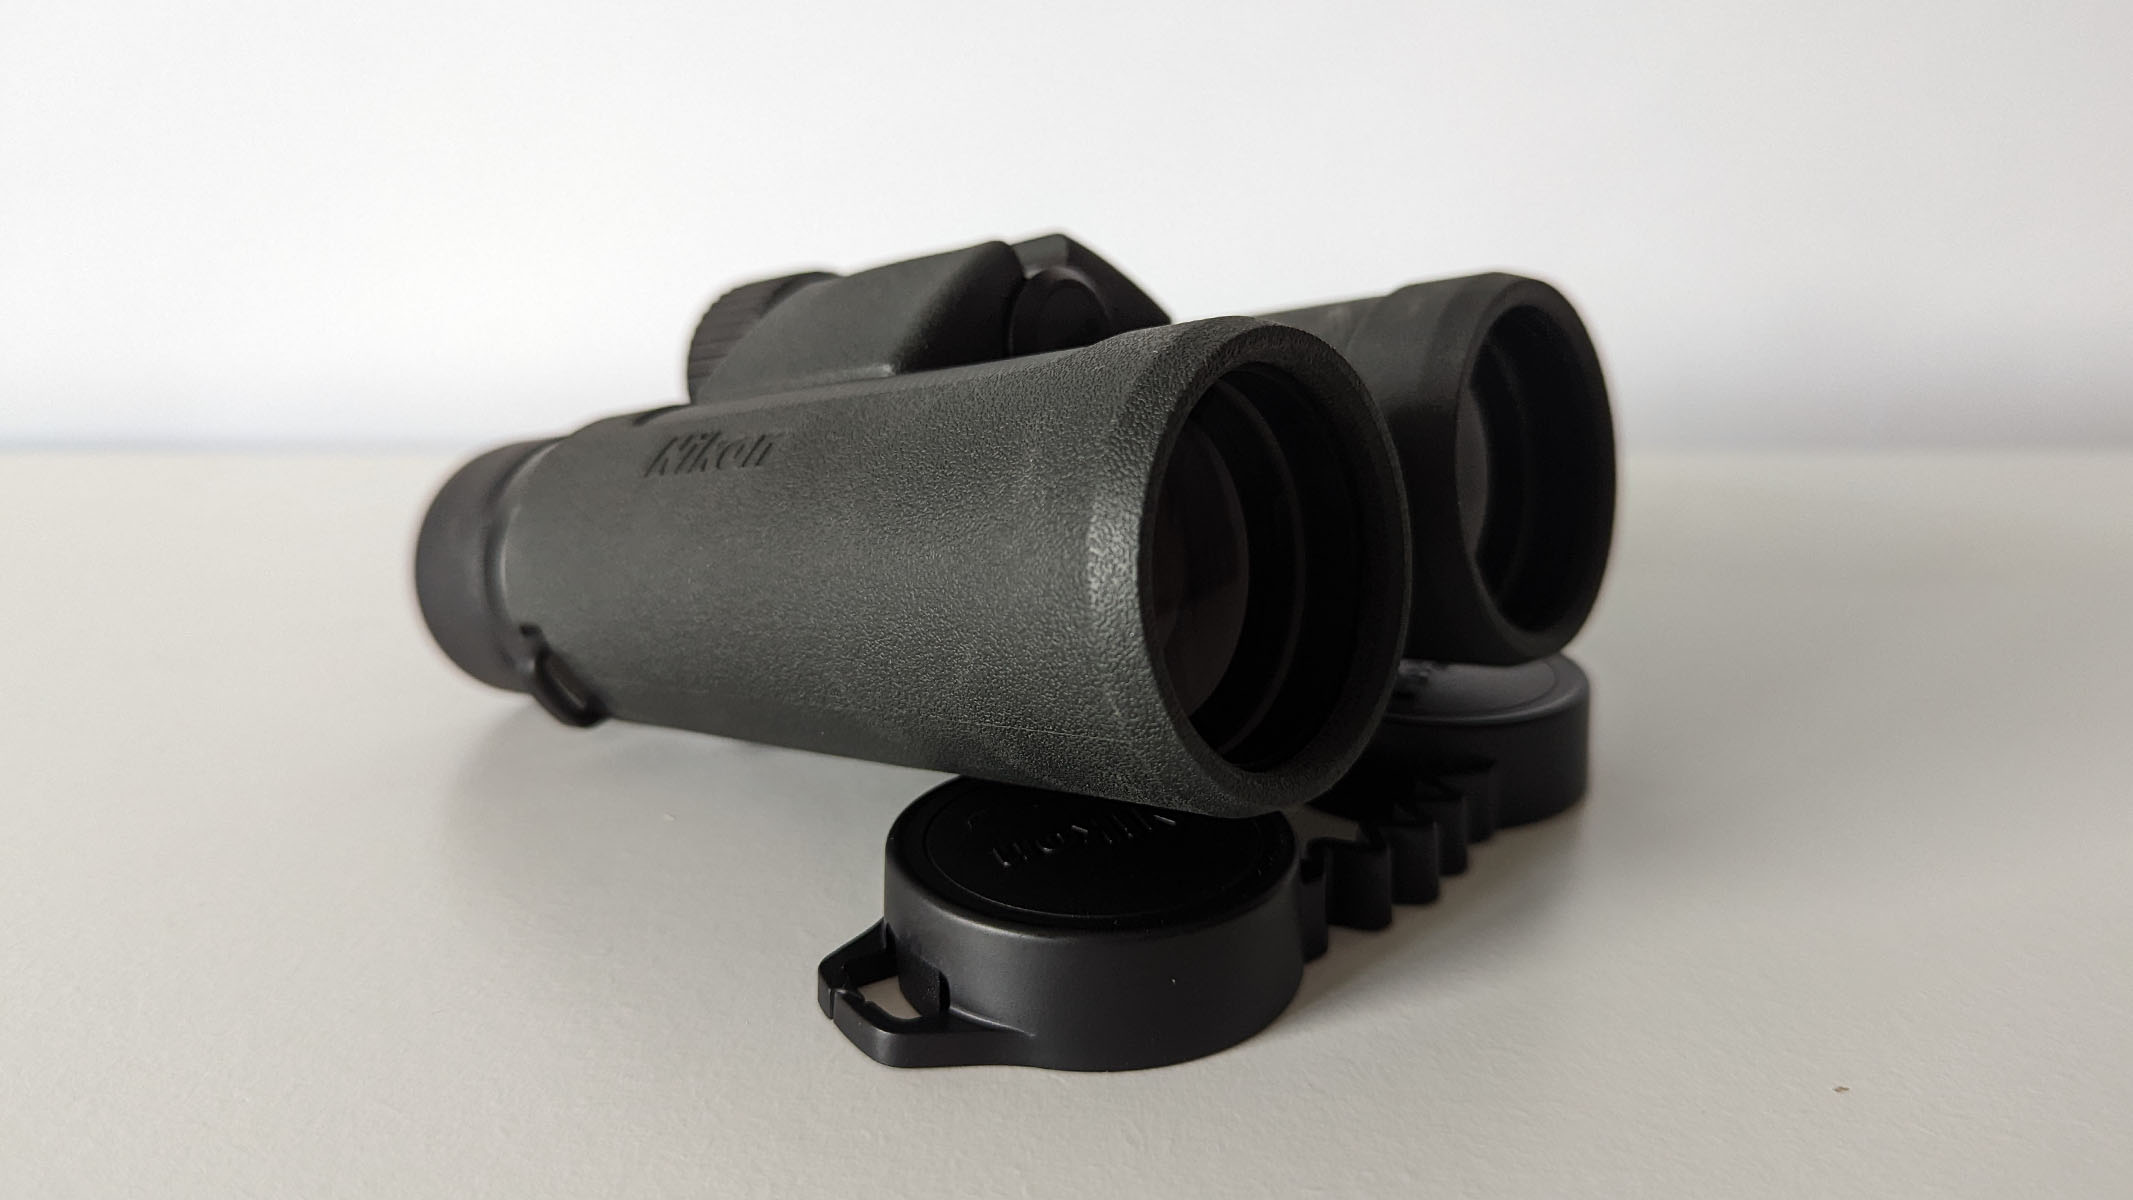 Side view of the Nikon Prostaff P3 8x42 binoculars